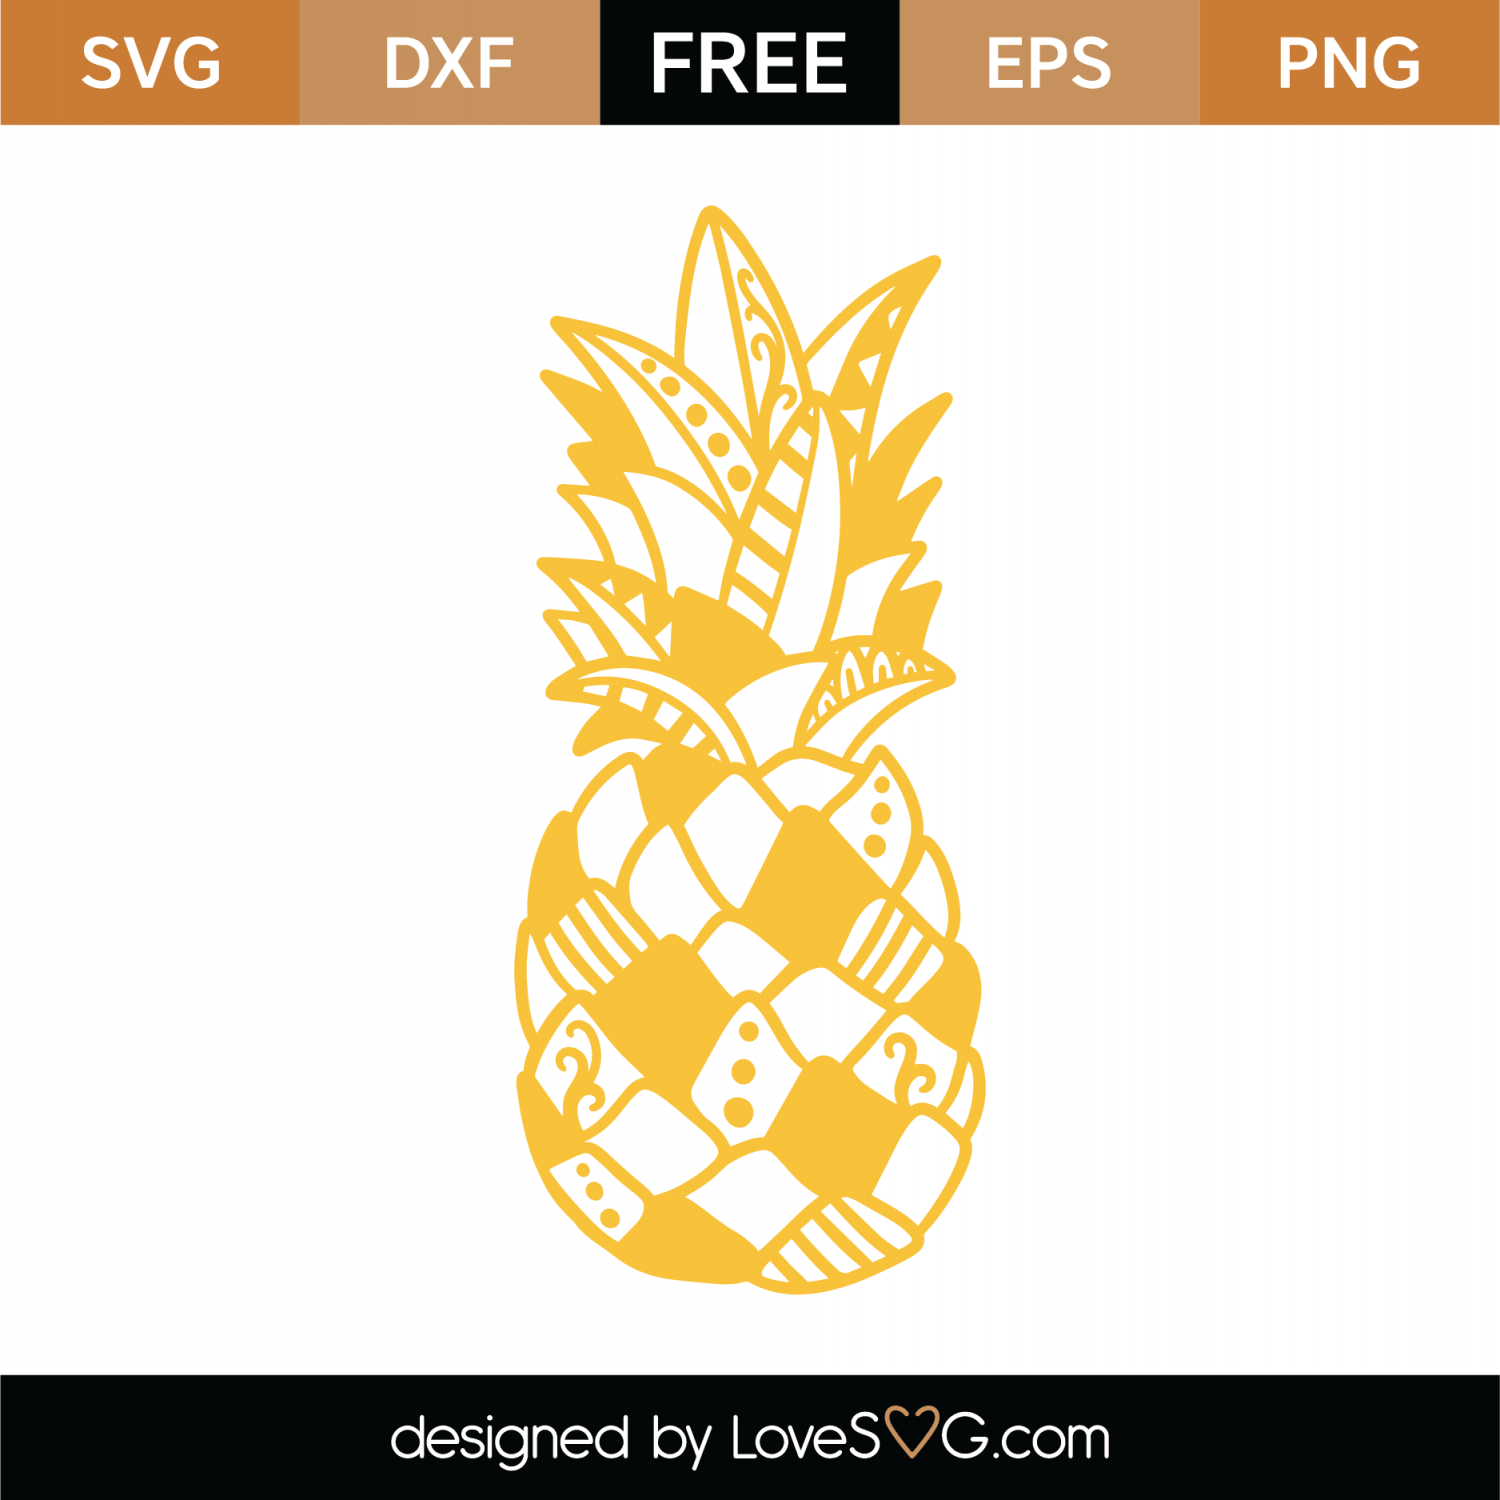 Download Free Decorative Pineapple SVG Cut File | Lovesvg.com